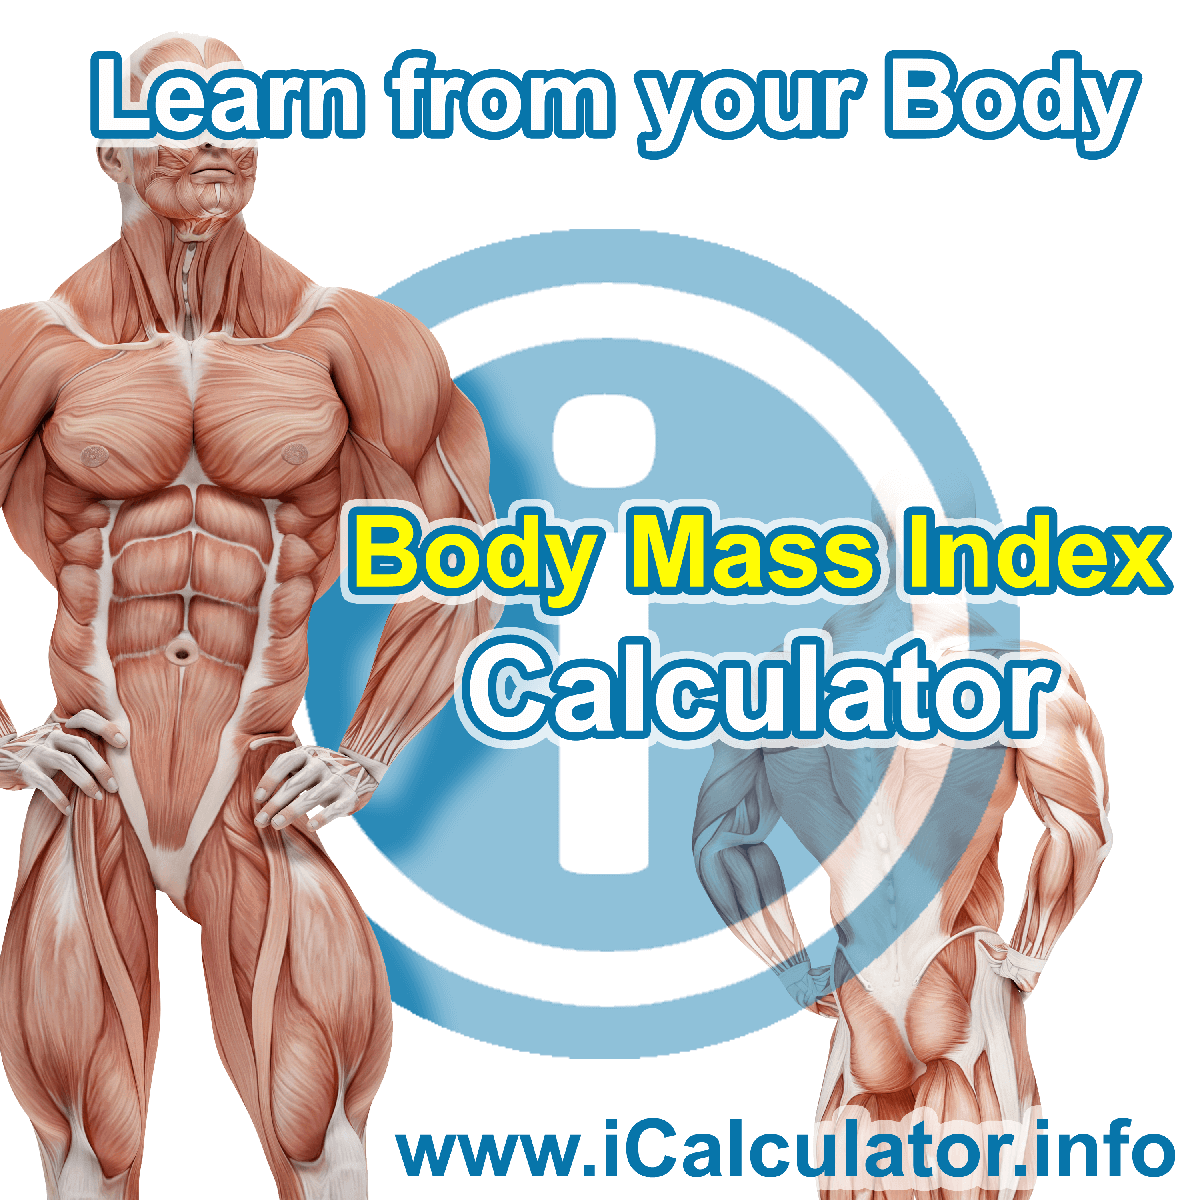 BMI Calculator. This image shows the BMI formula for the BMI Calculator